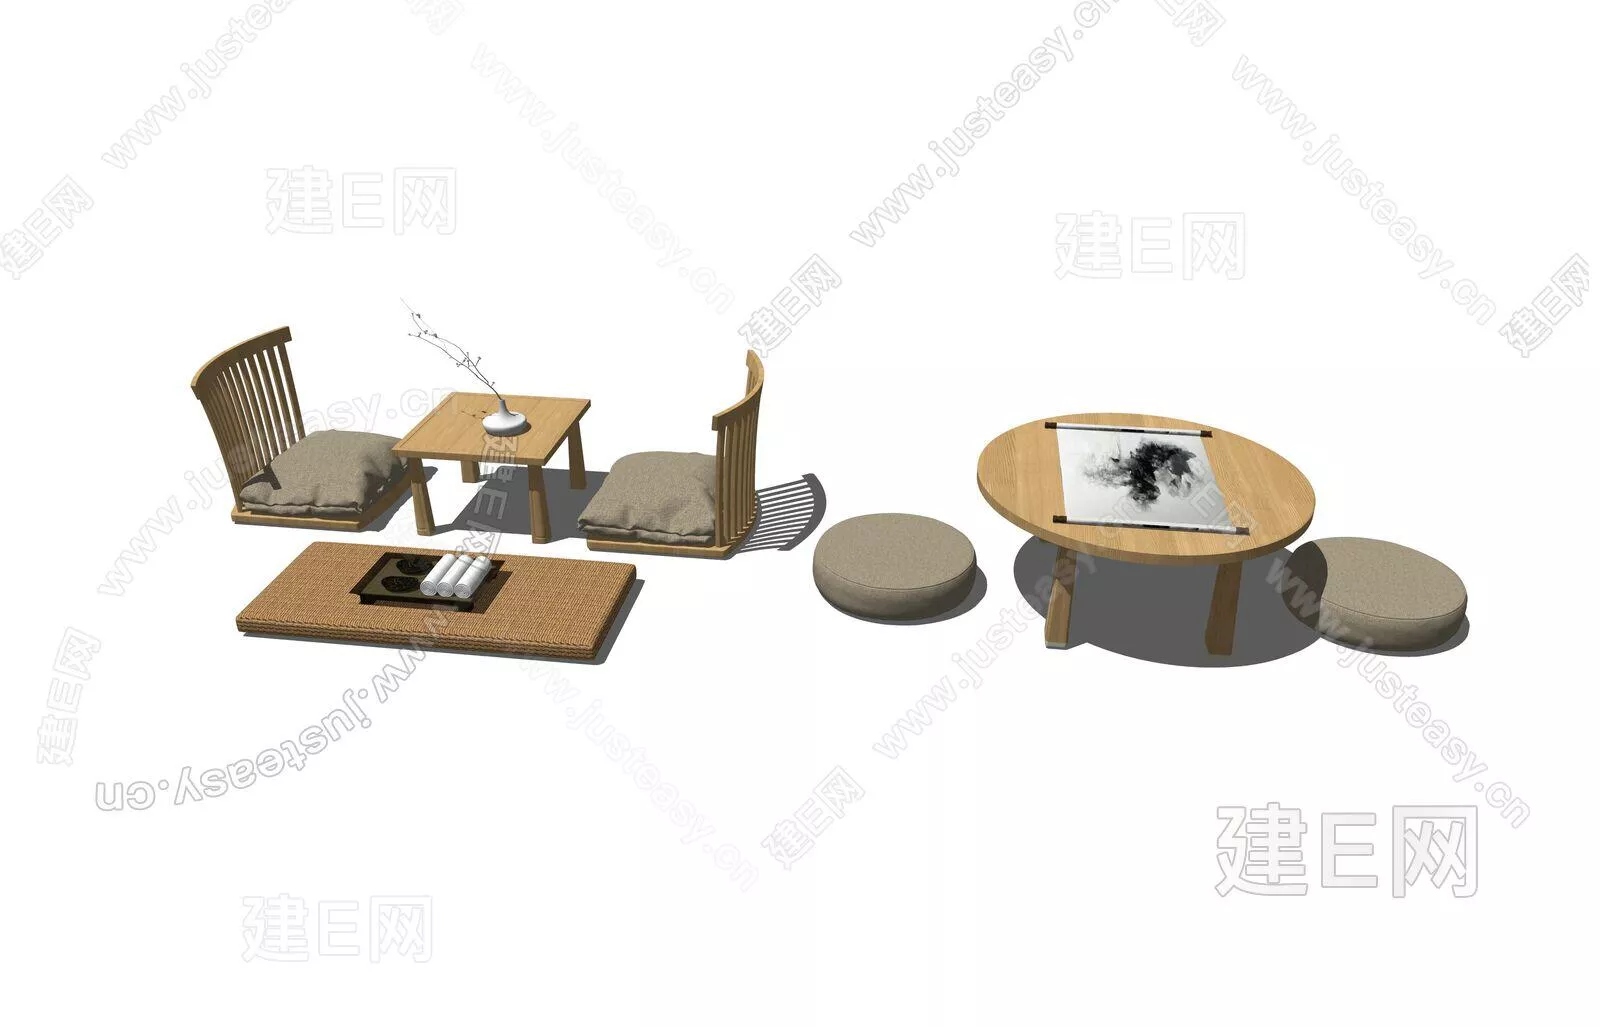 JAPANESE TEA TABLE SET - SKETCHUP 3D MODEL - ENSCAPE - 110839090